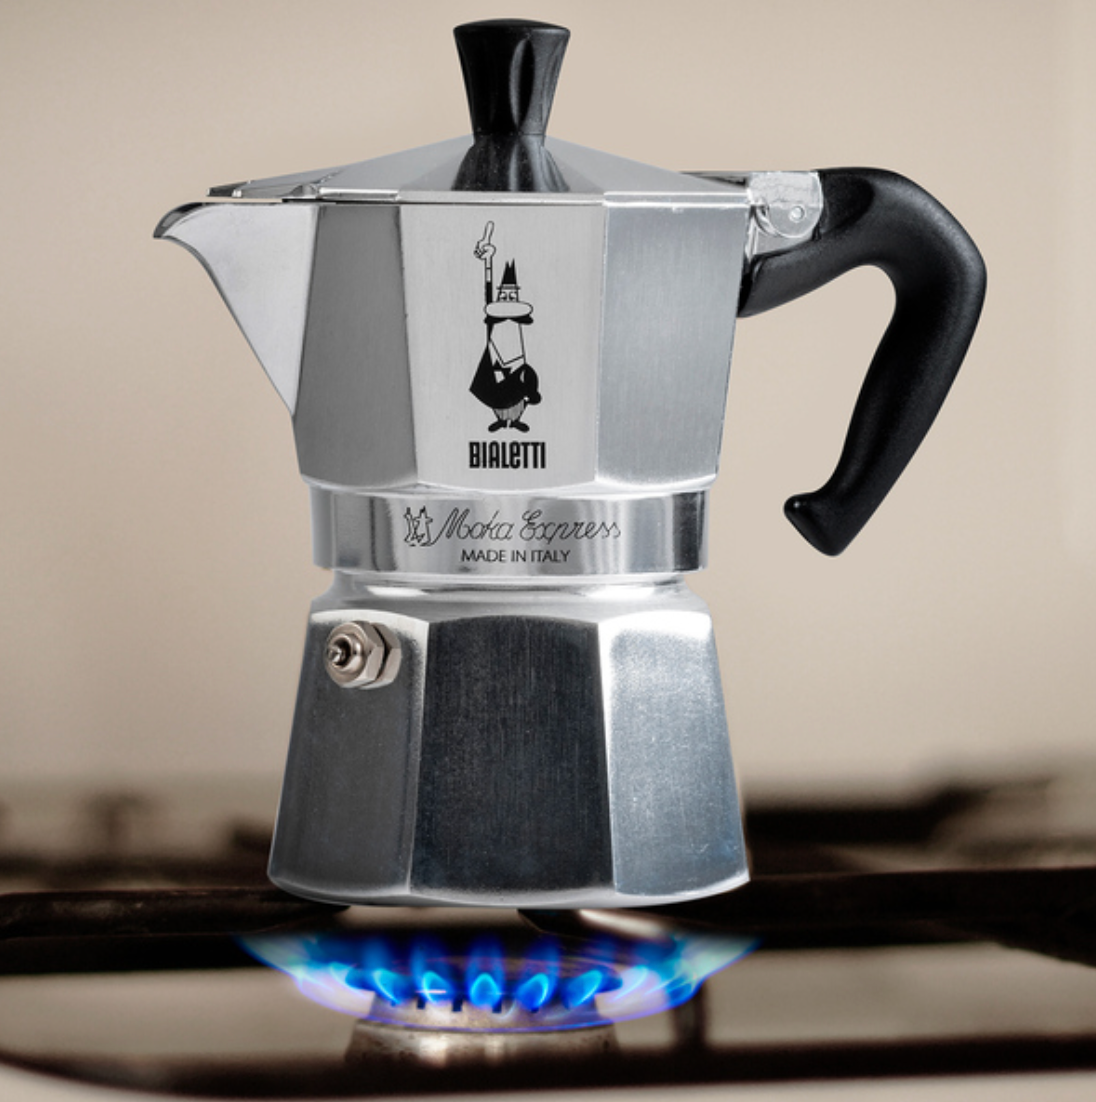 Bialetti Moka induction Stove top Coffee Makers